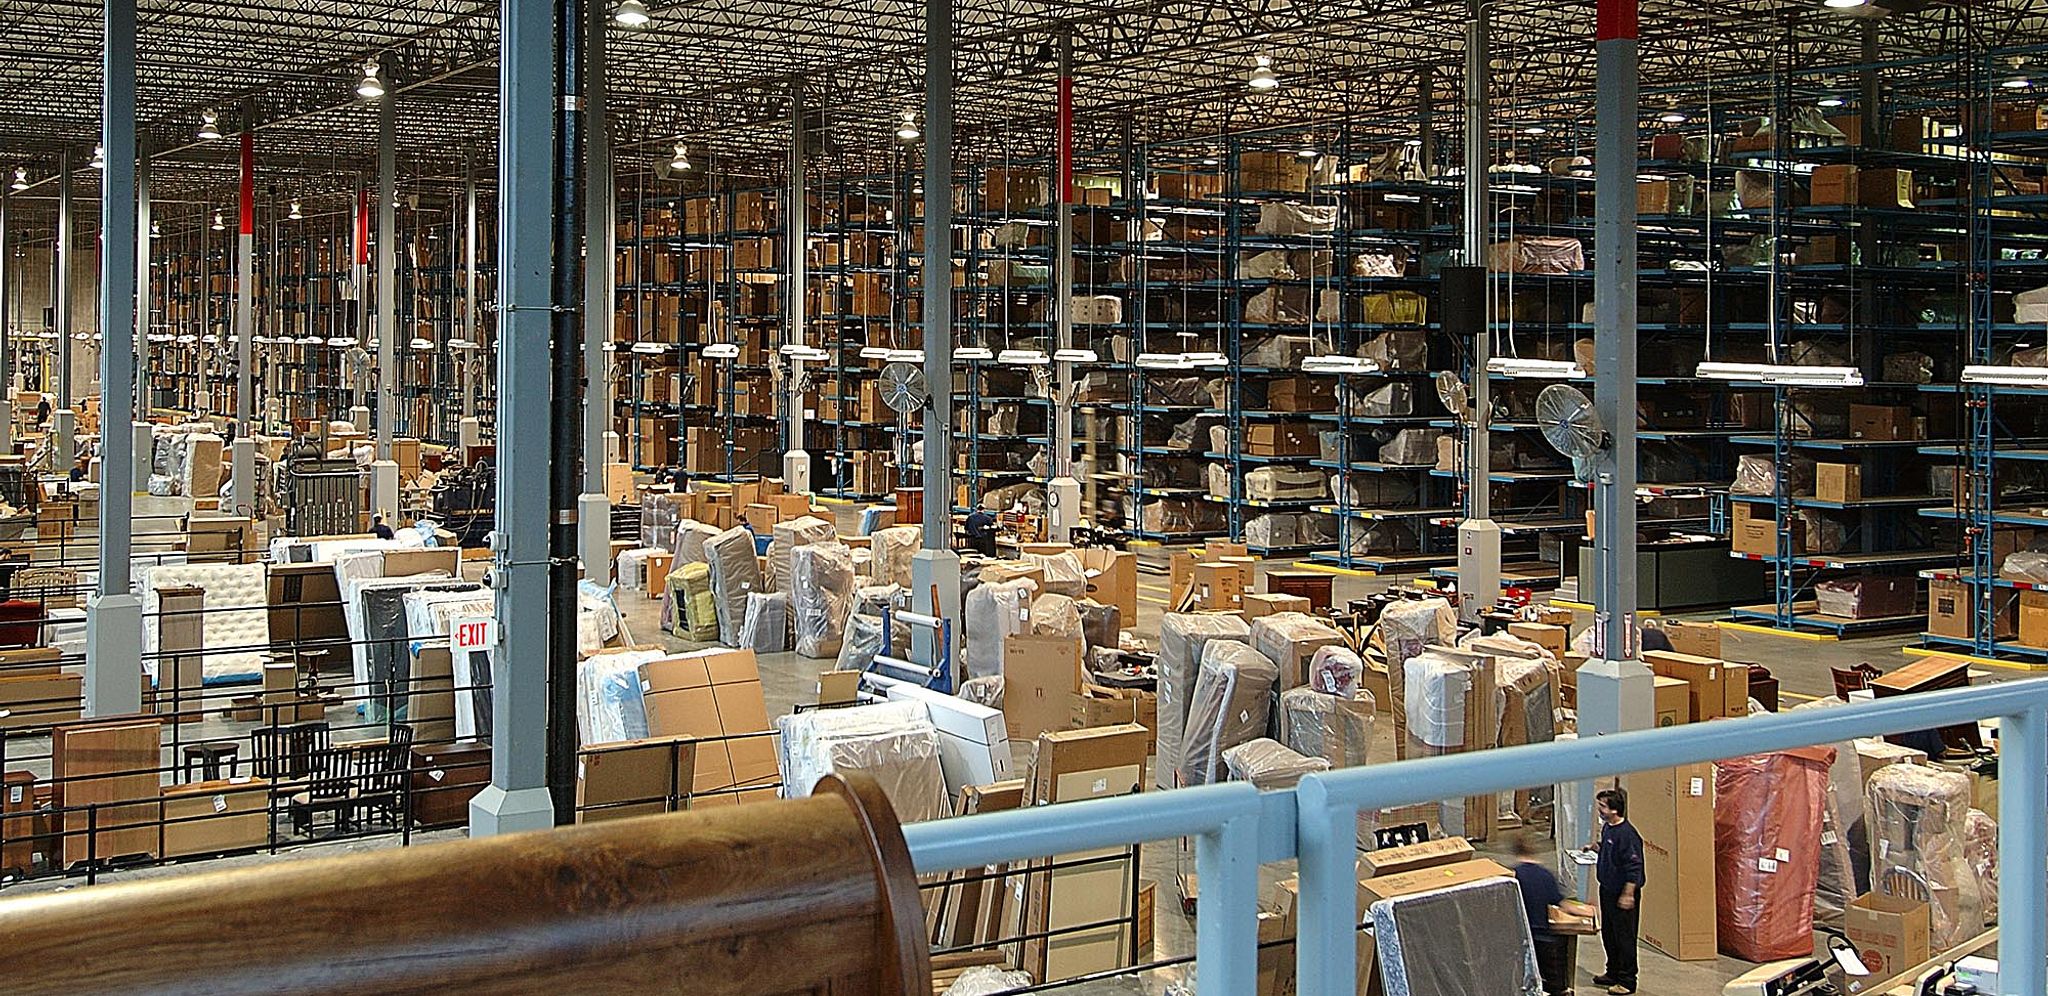 Jordan’s Furniture Taunton, MA Warehouse and Distribution Facility